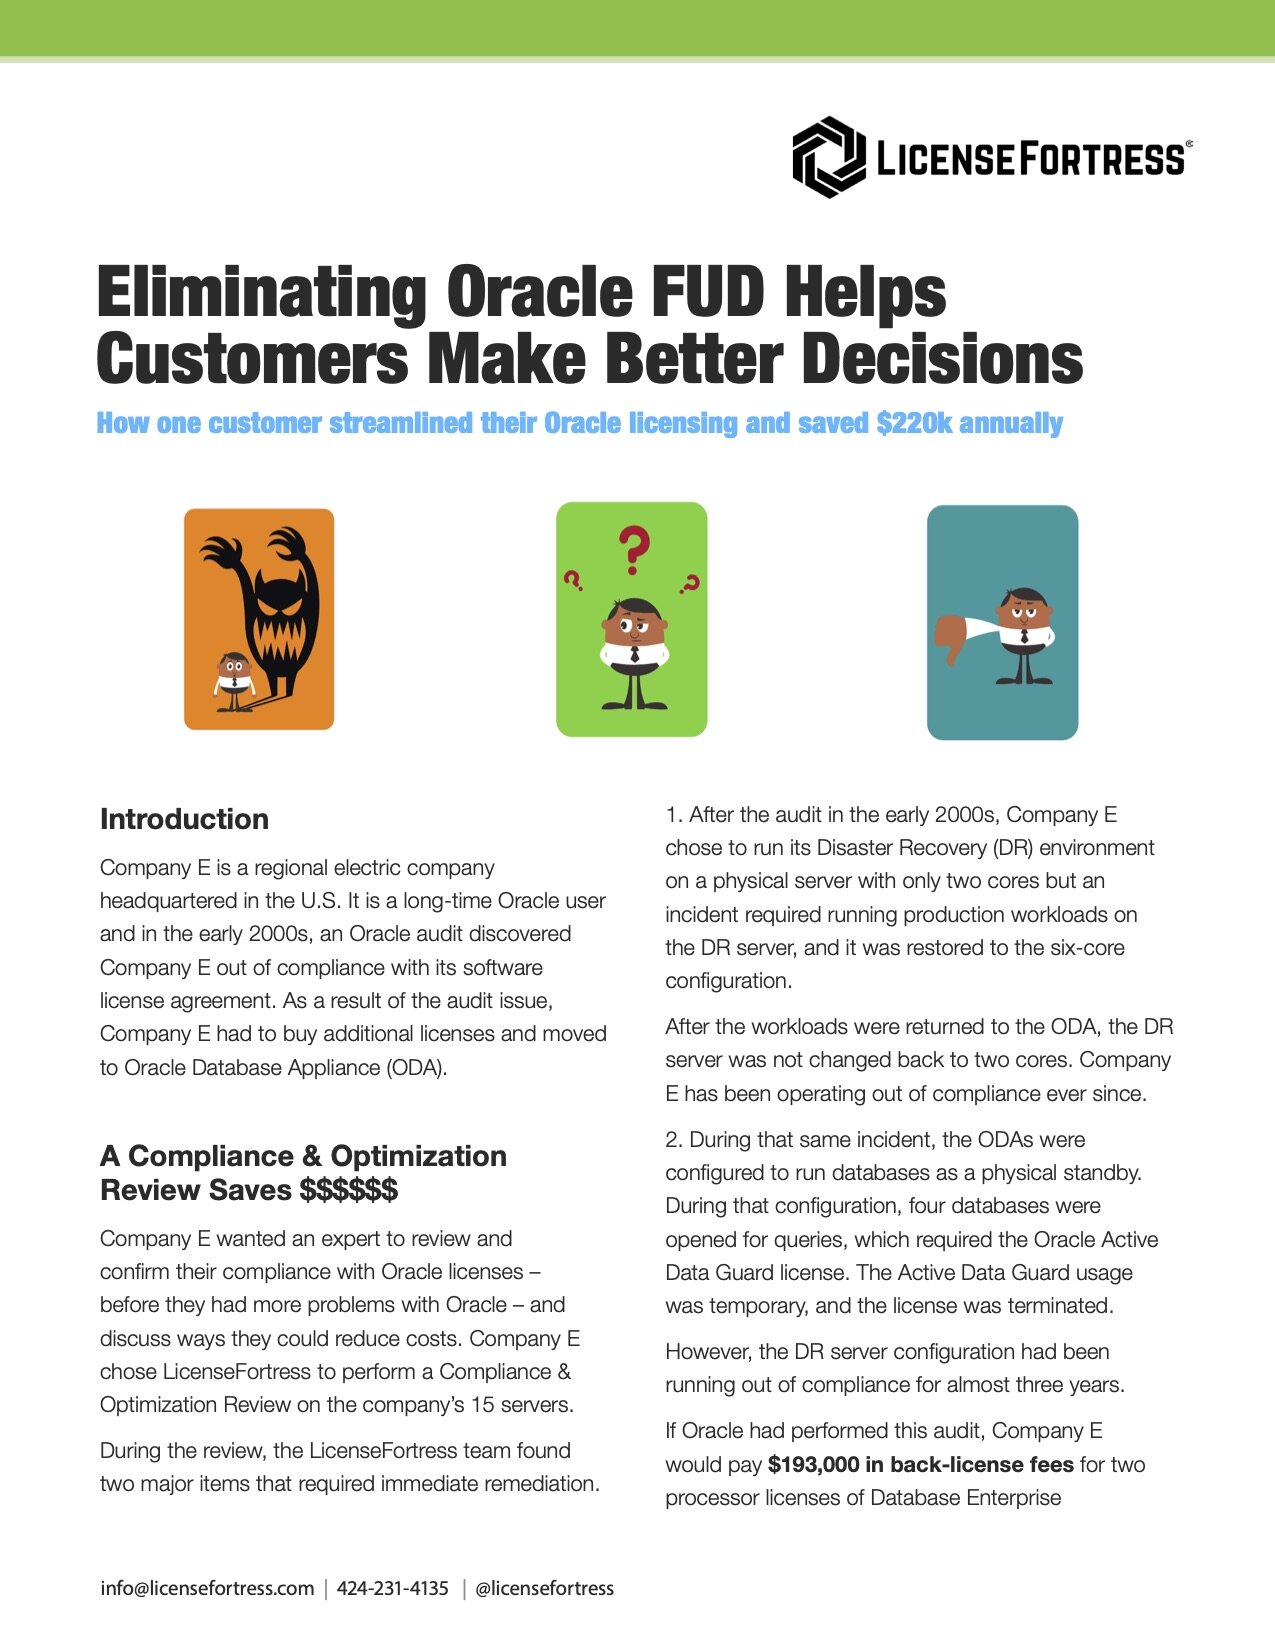 Eliminating Oracle FUD Helps Customer Make Better Decisions.jpg